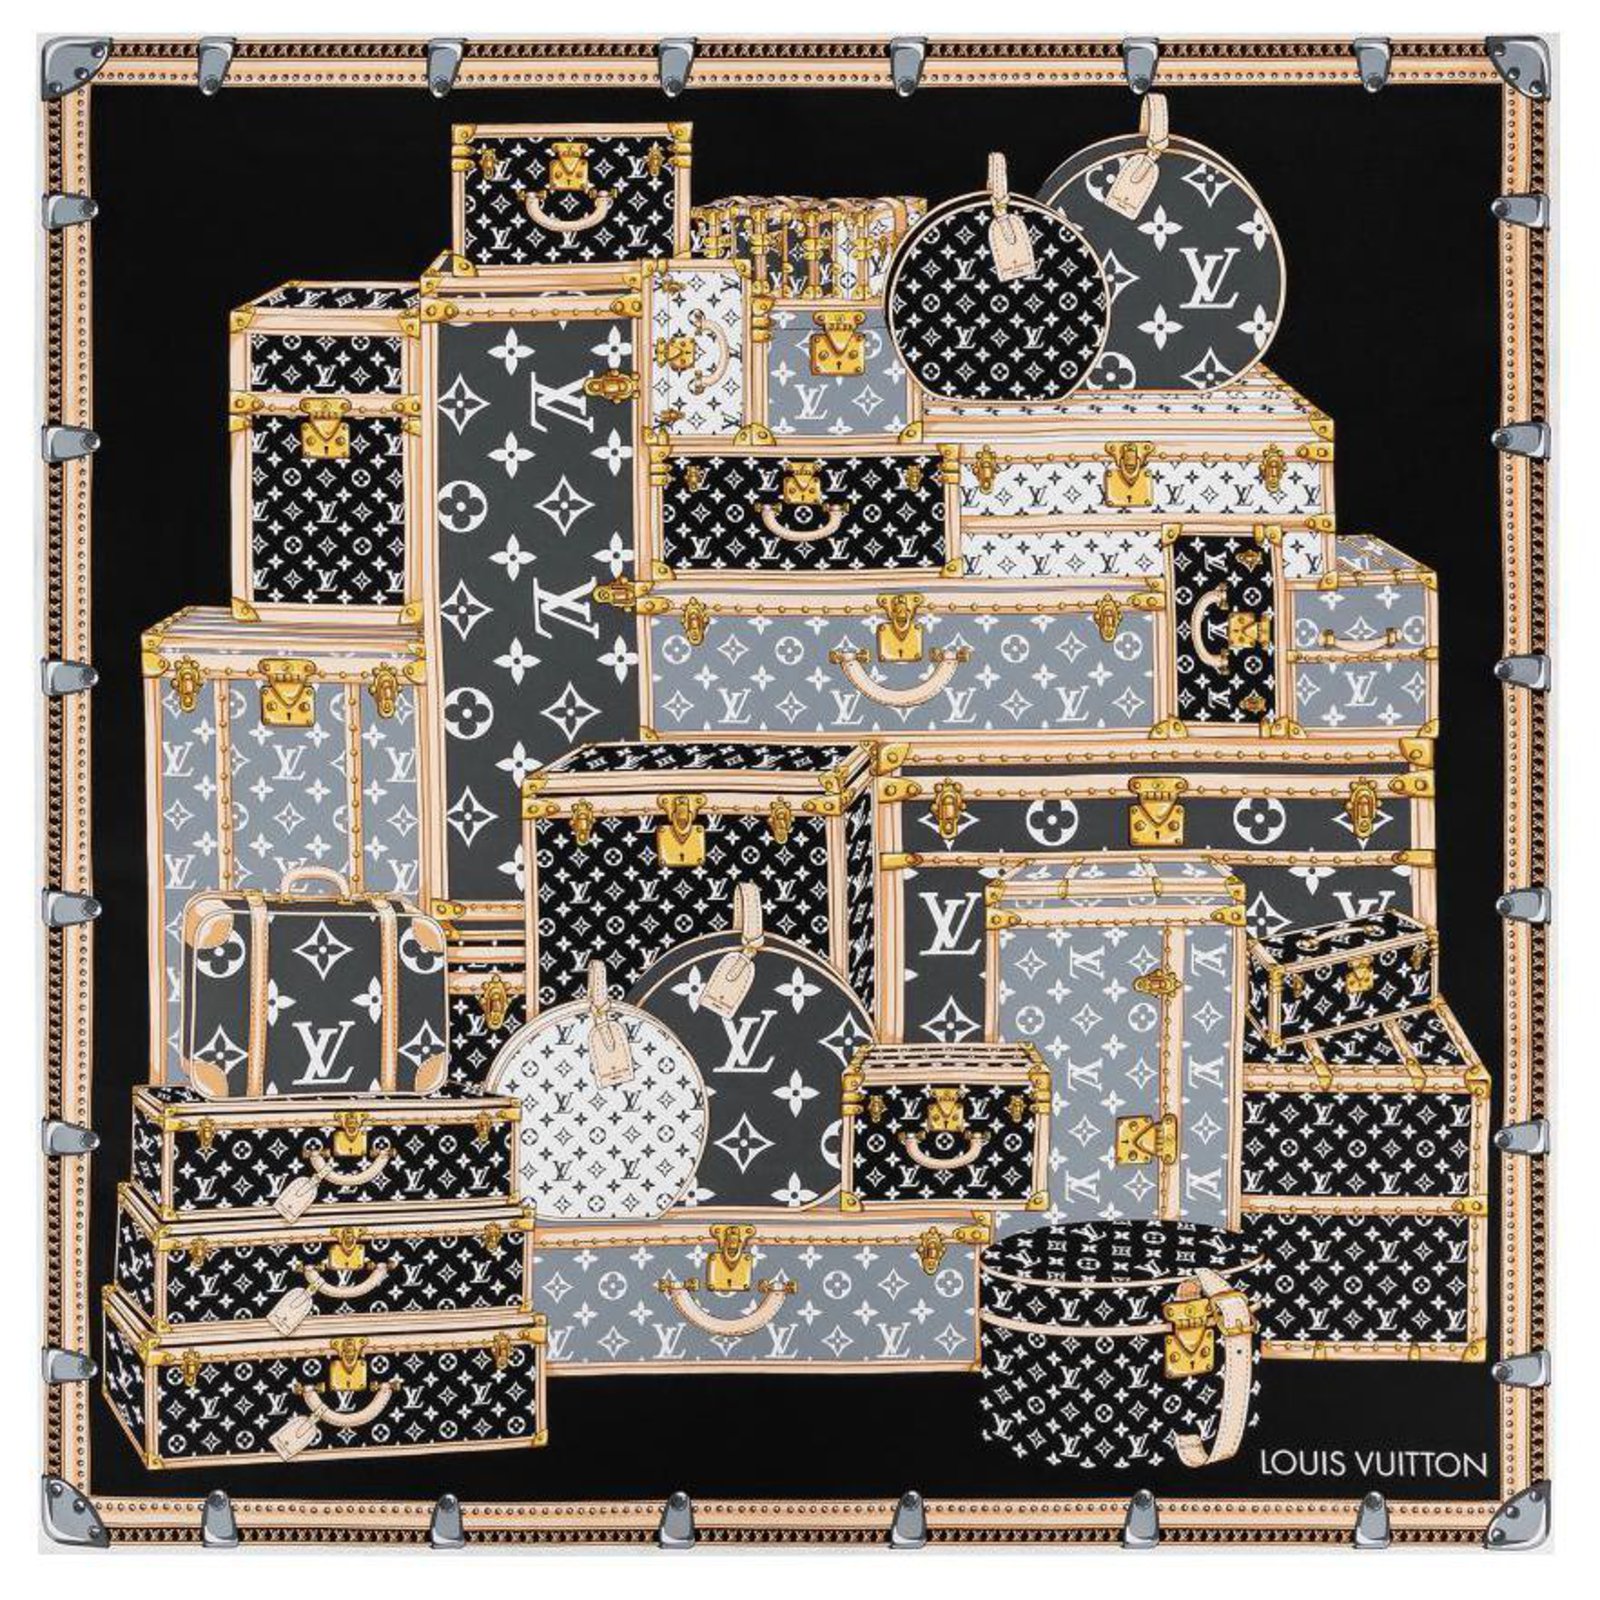 FOR SALE* FW19 Louis Vuitton 'Sound Design' Partition Intarsia